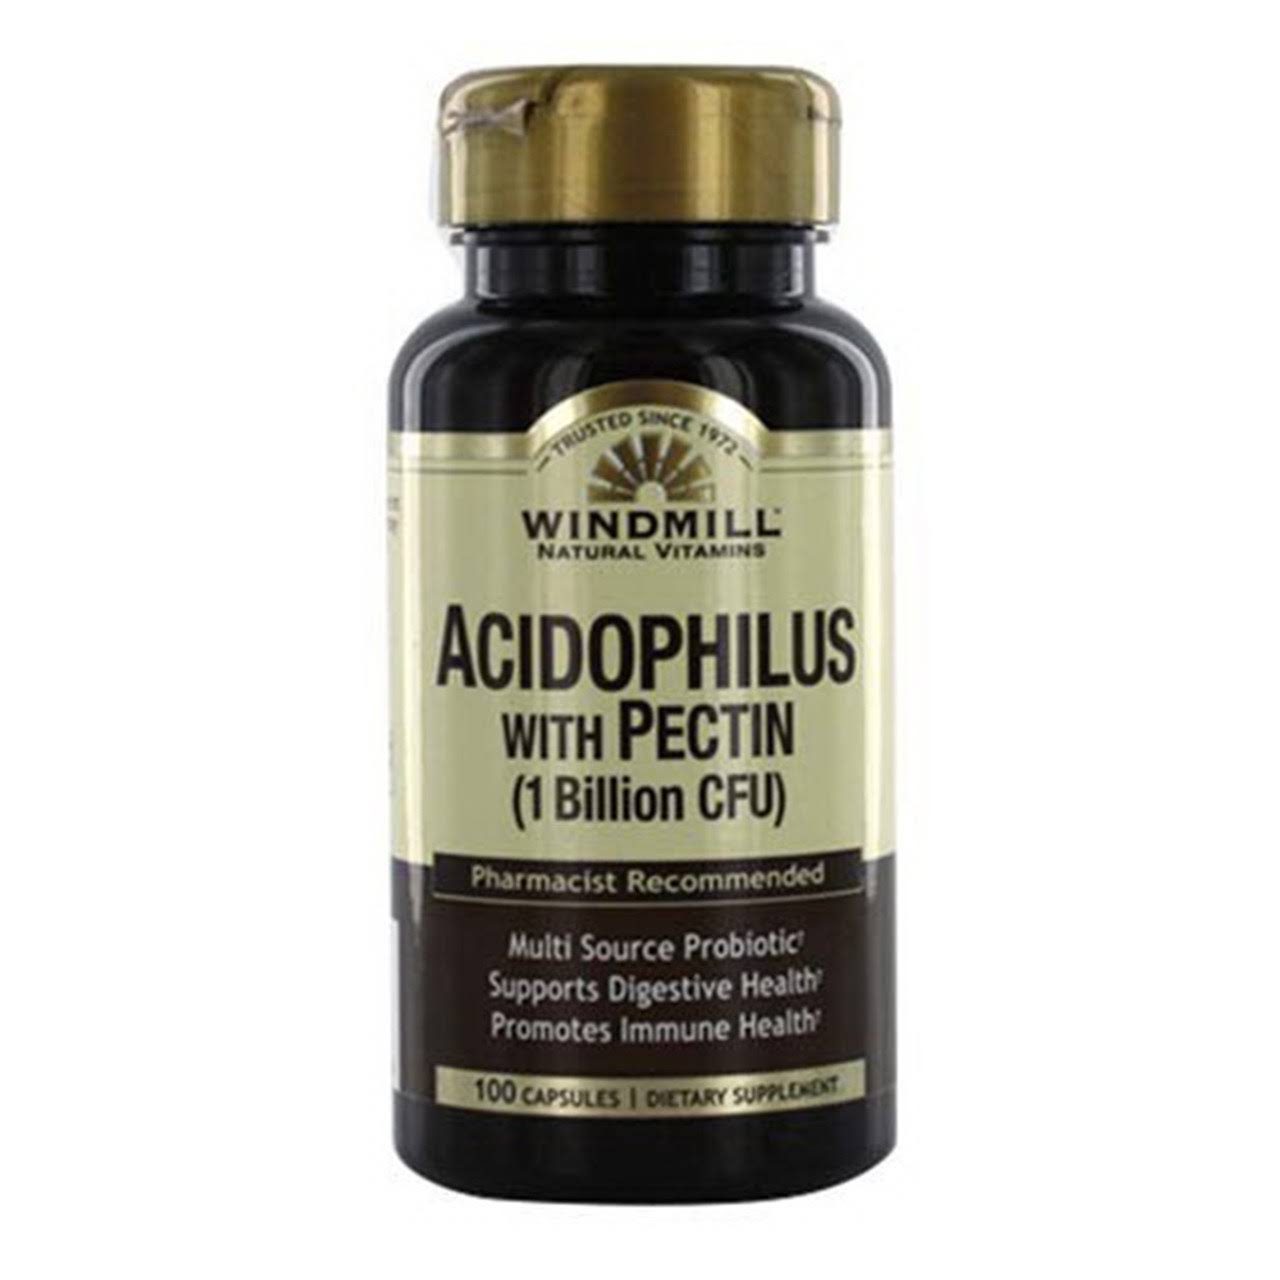 Windmill Acidophilus with Pectin - 100 Capsules